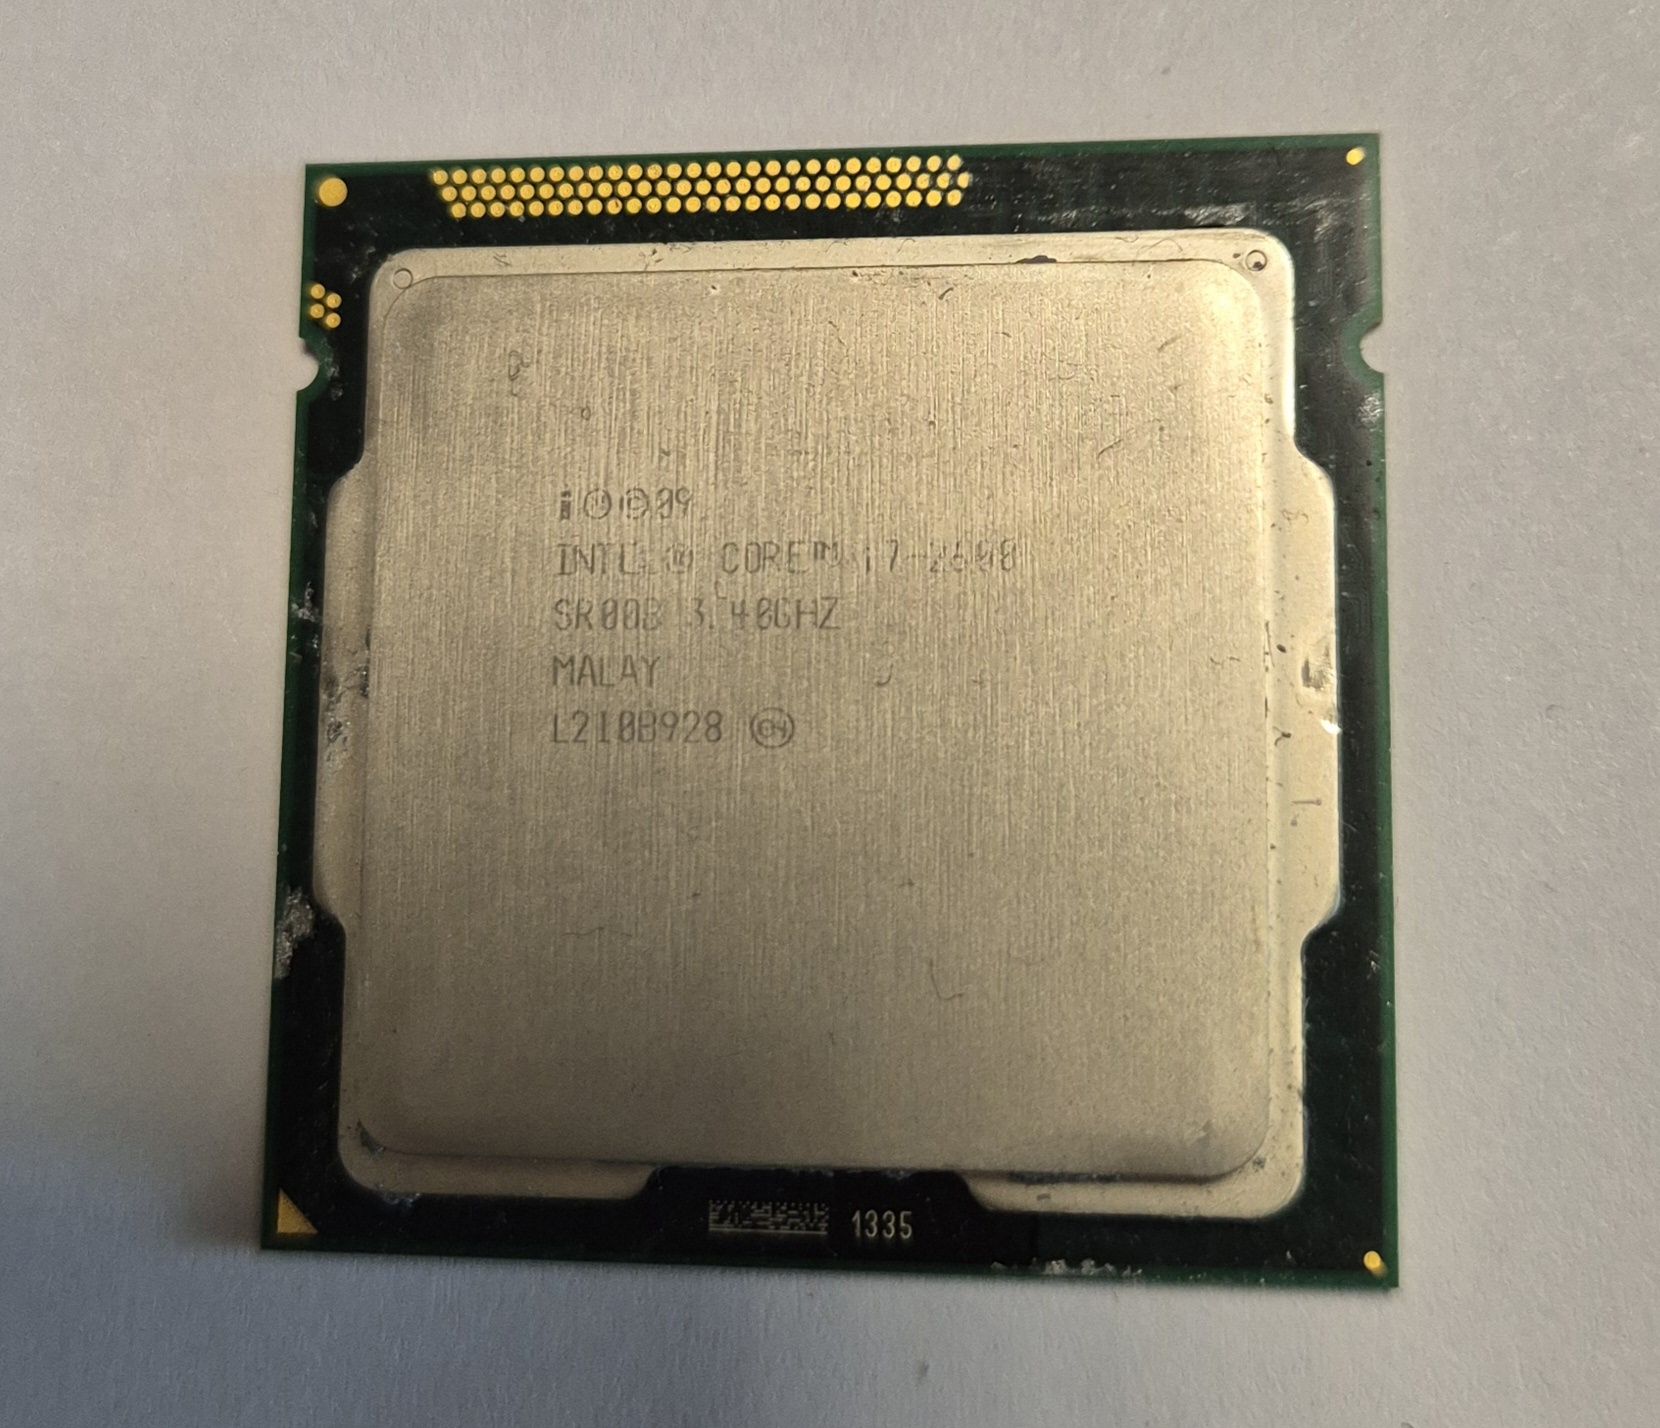 Procesor I7-2600 3.4 GHz